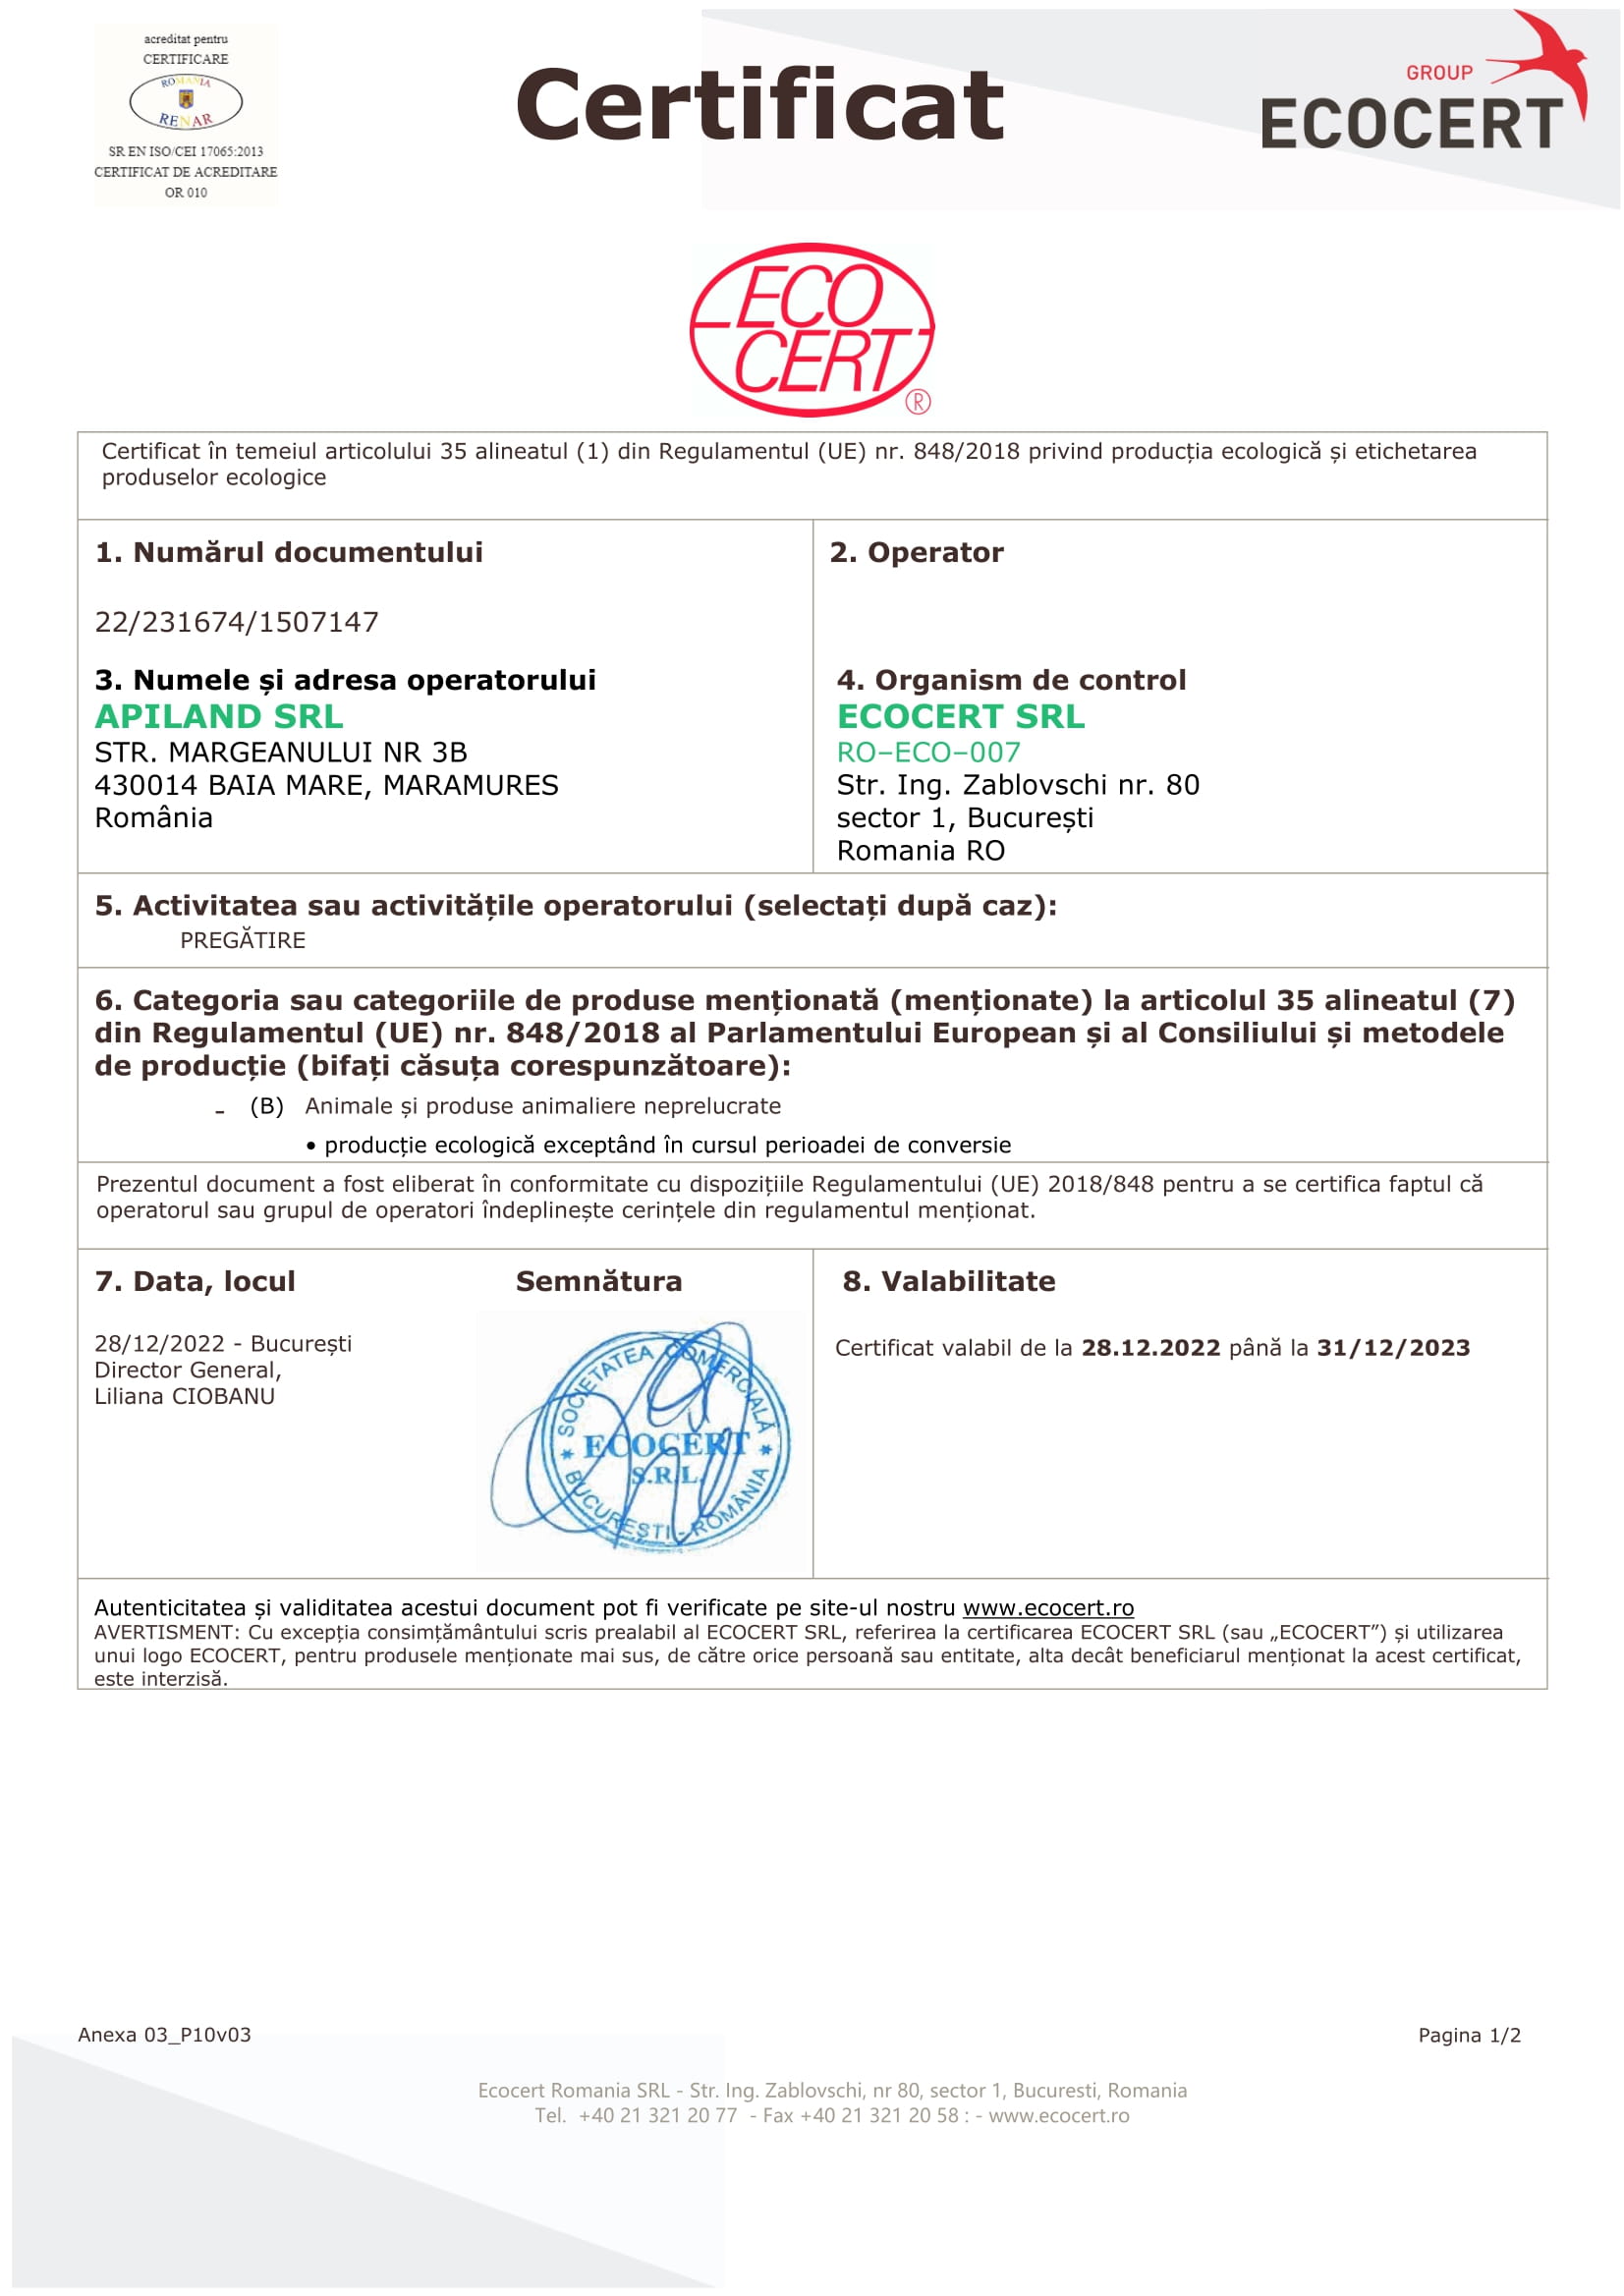 Certificat Ecocert ApiLand